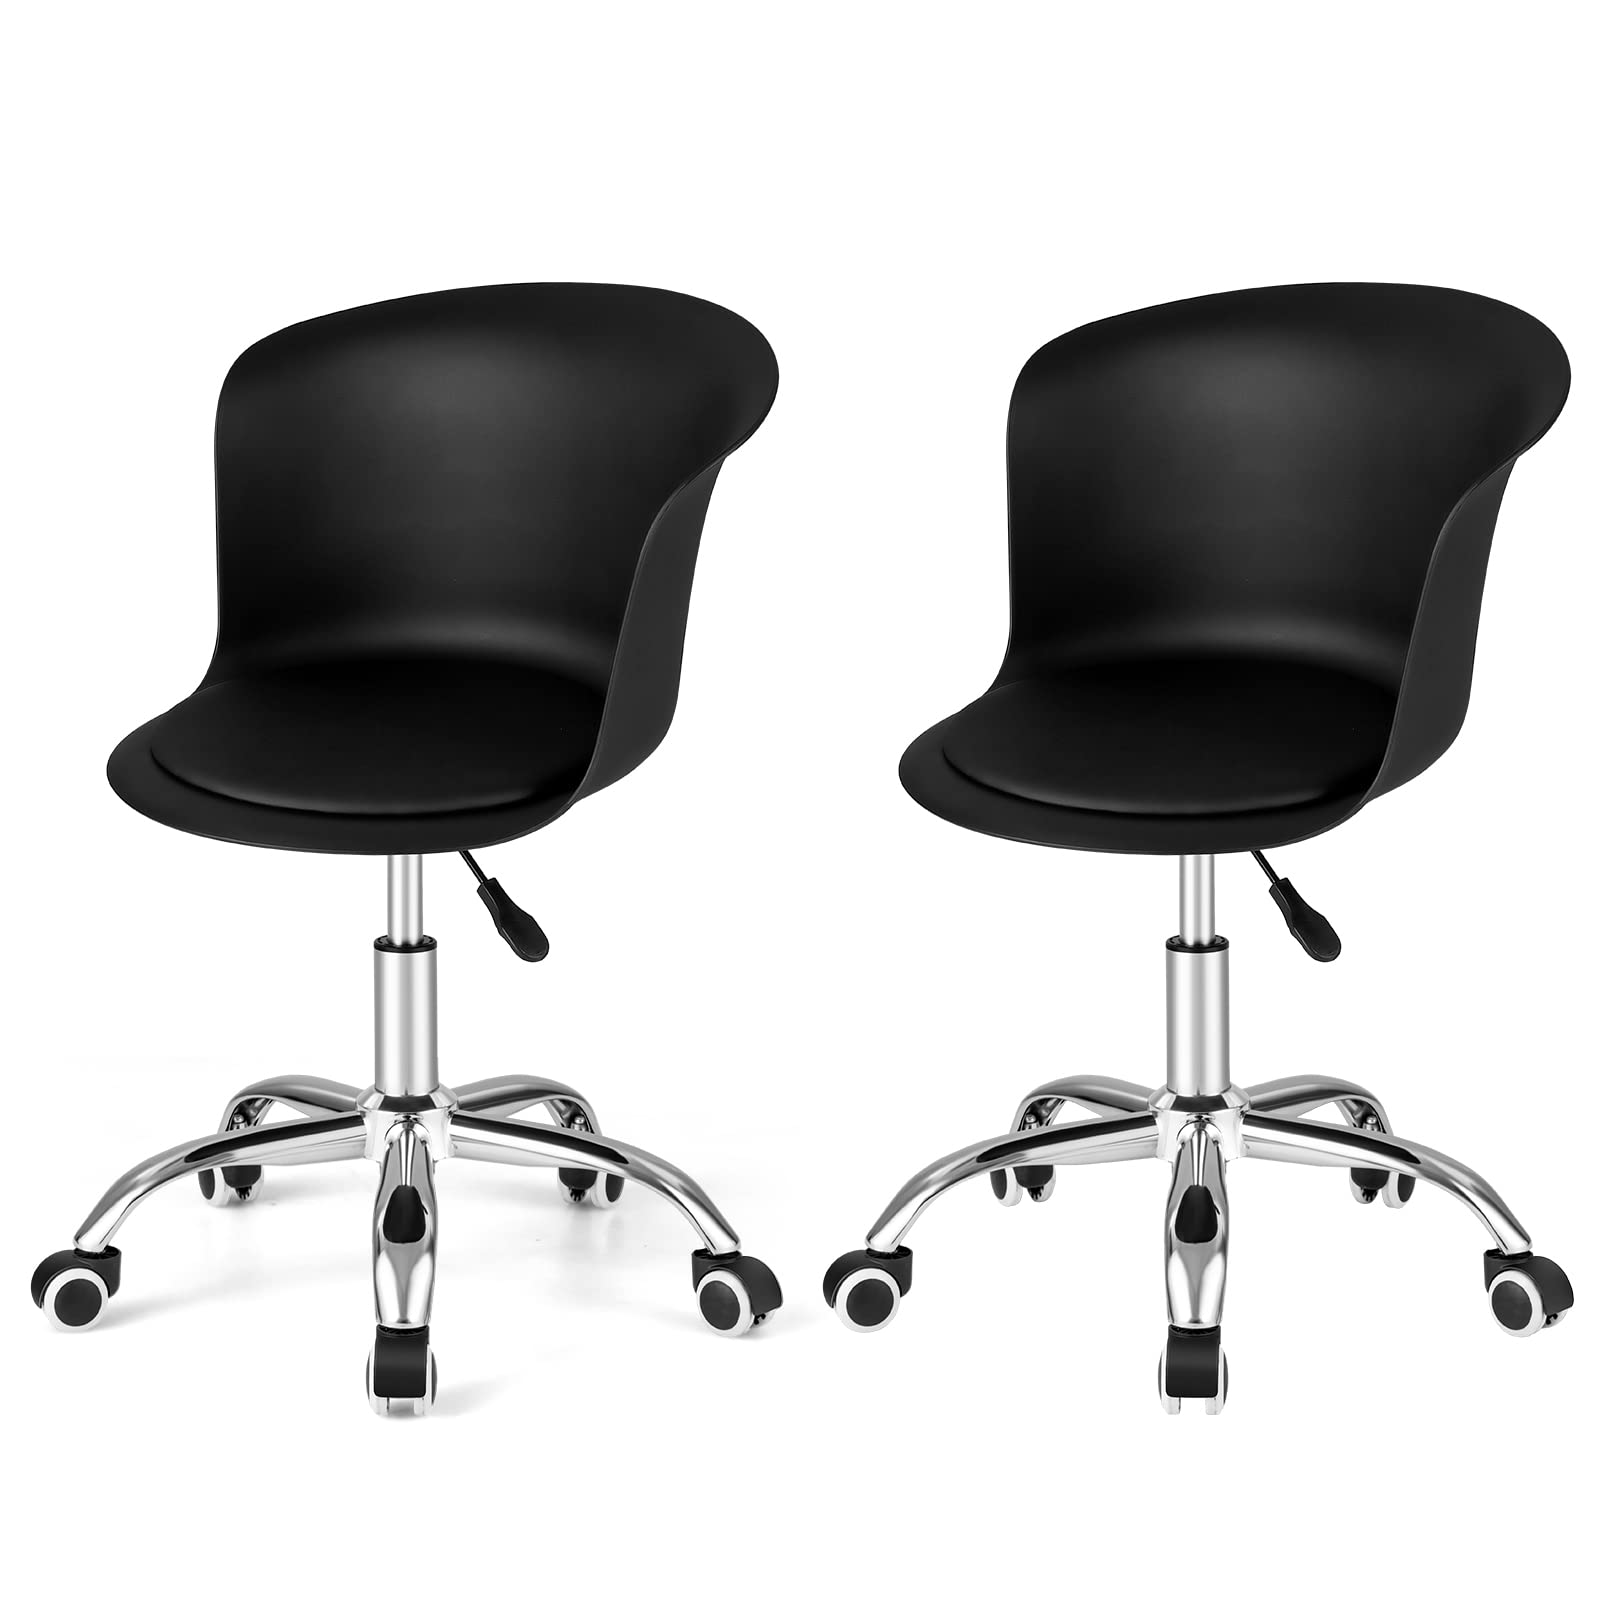 Giantex Home Office Desk Chair Set